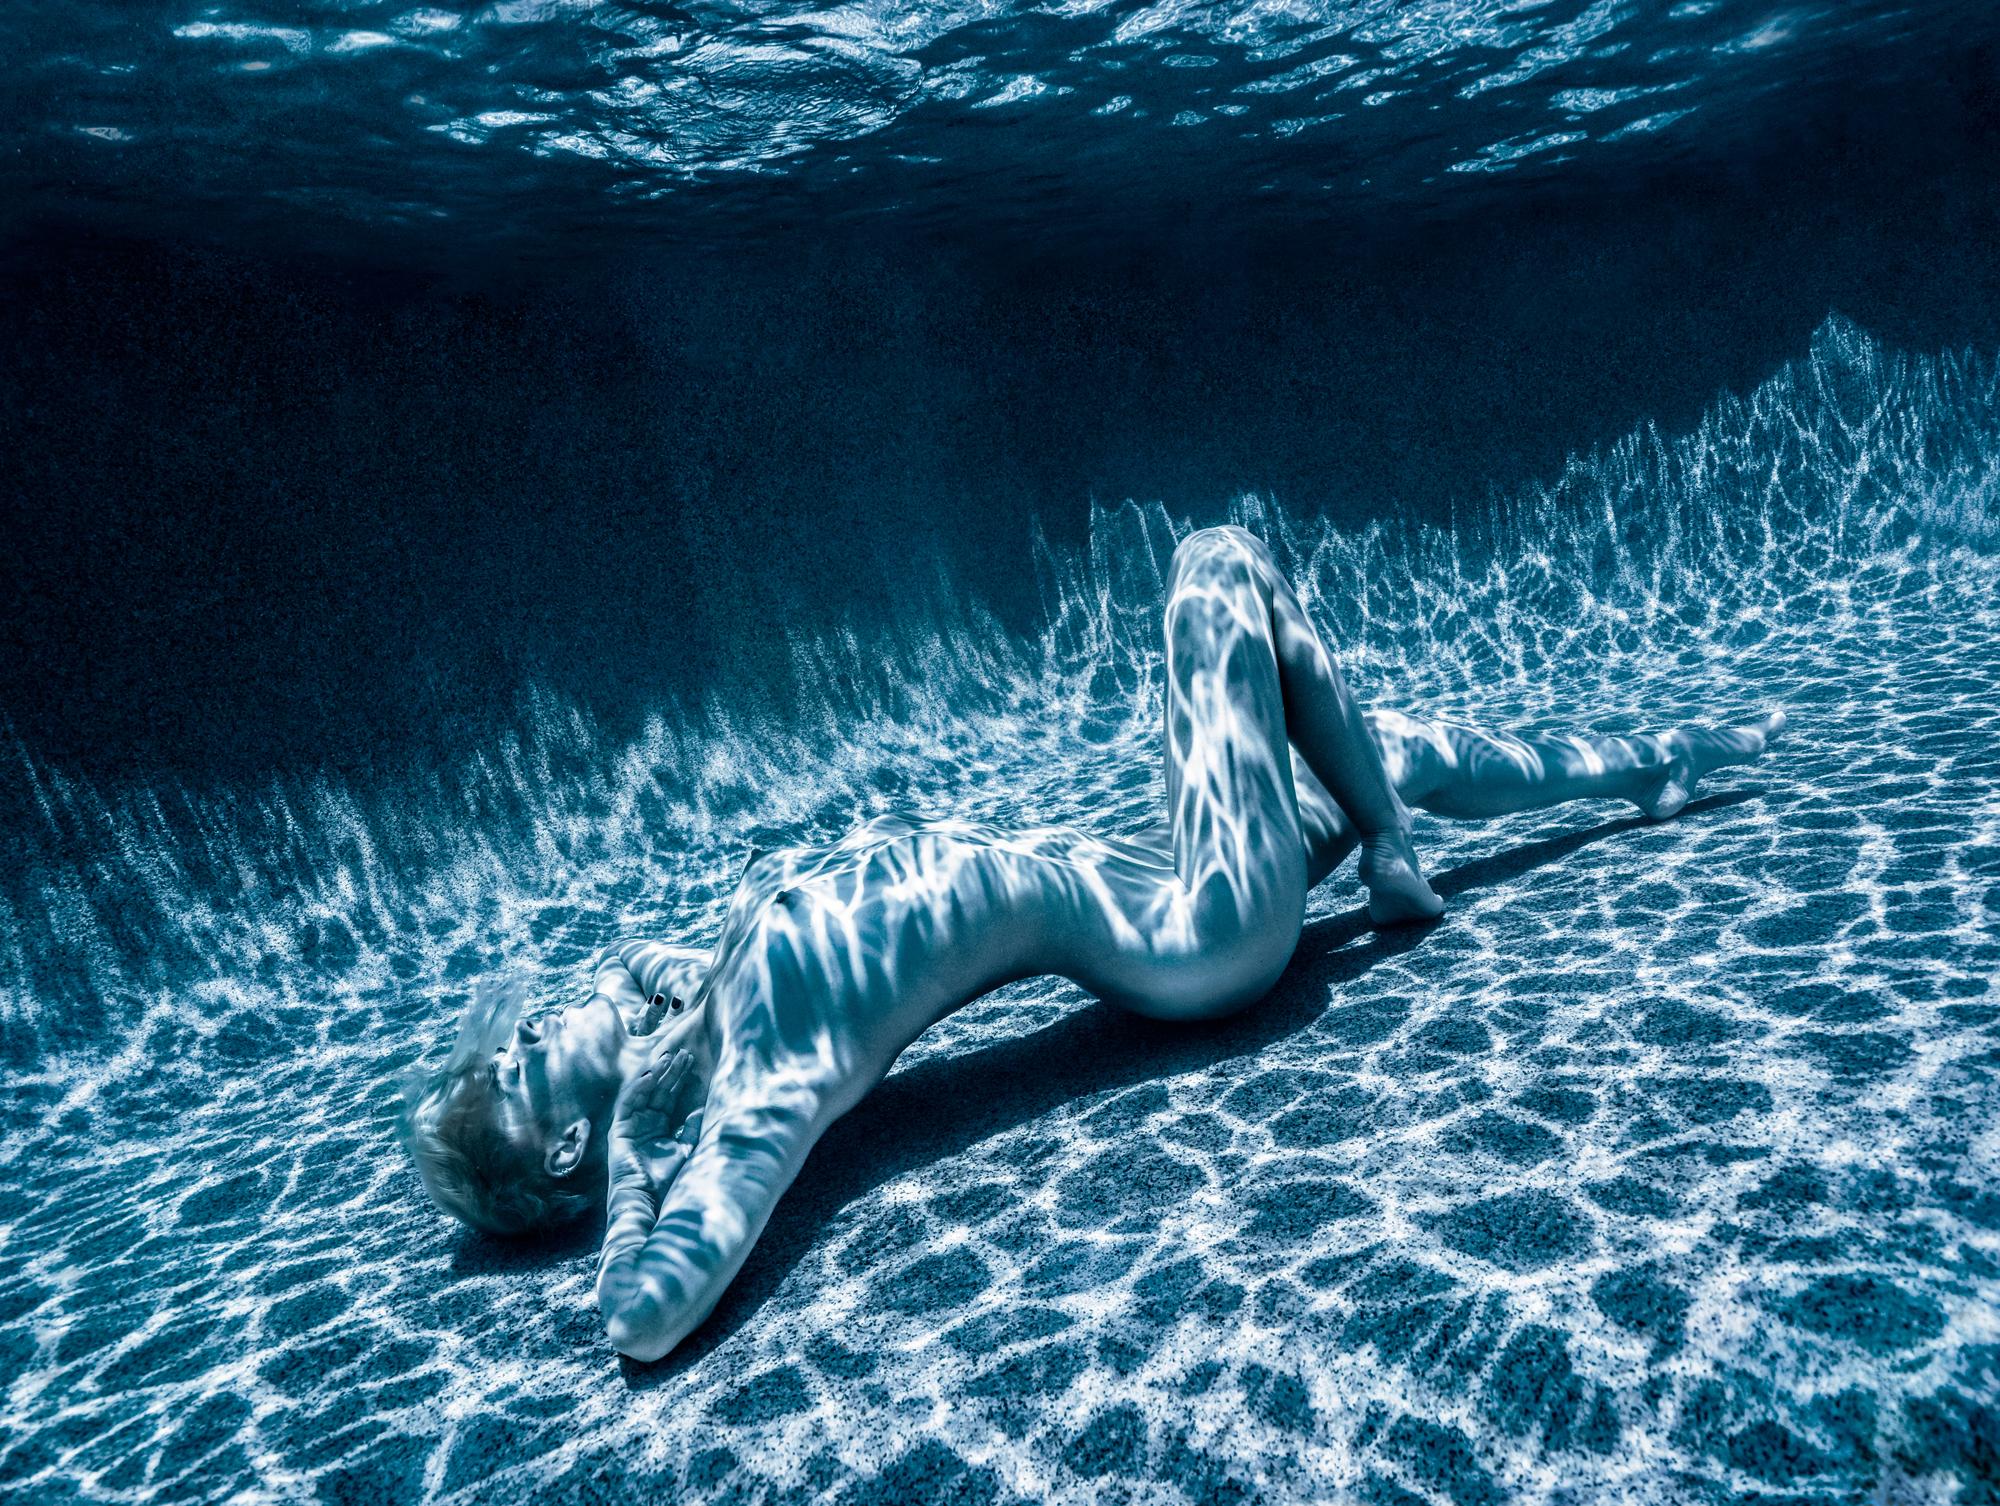 Moonlight - underwater nude photograph - archival pigment print 35x47"